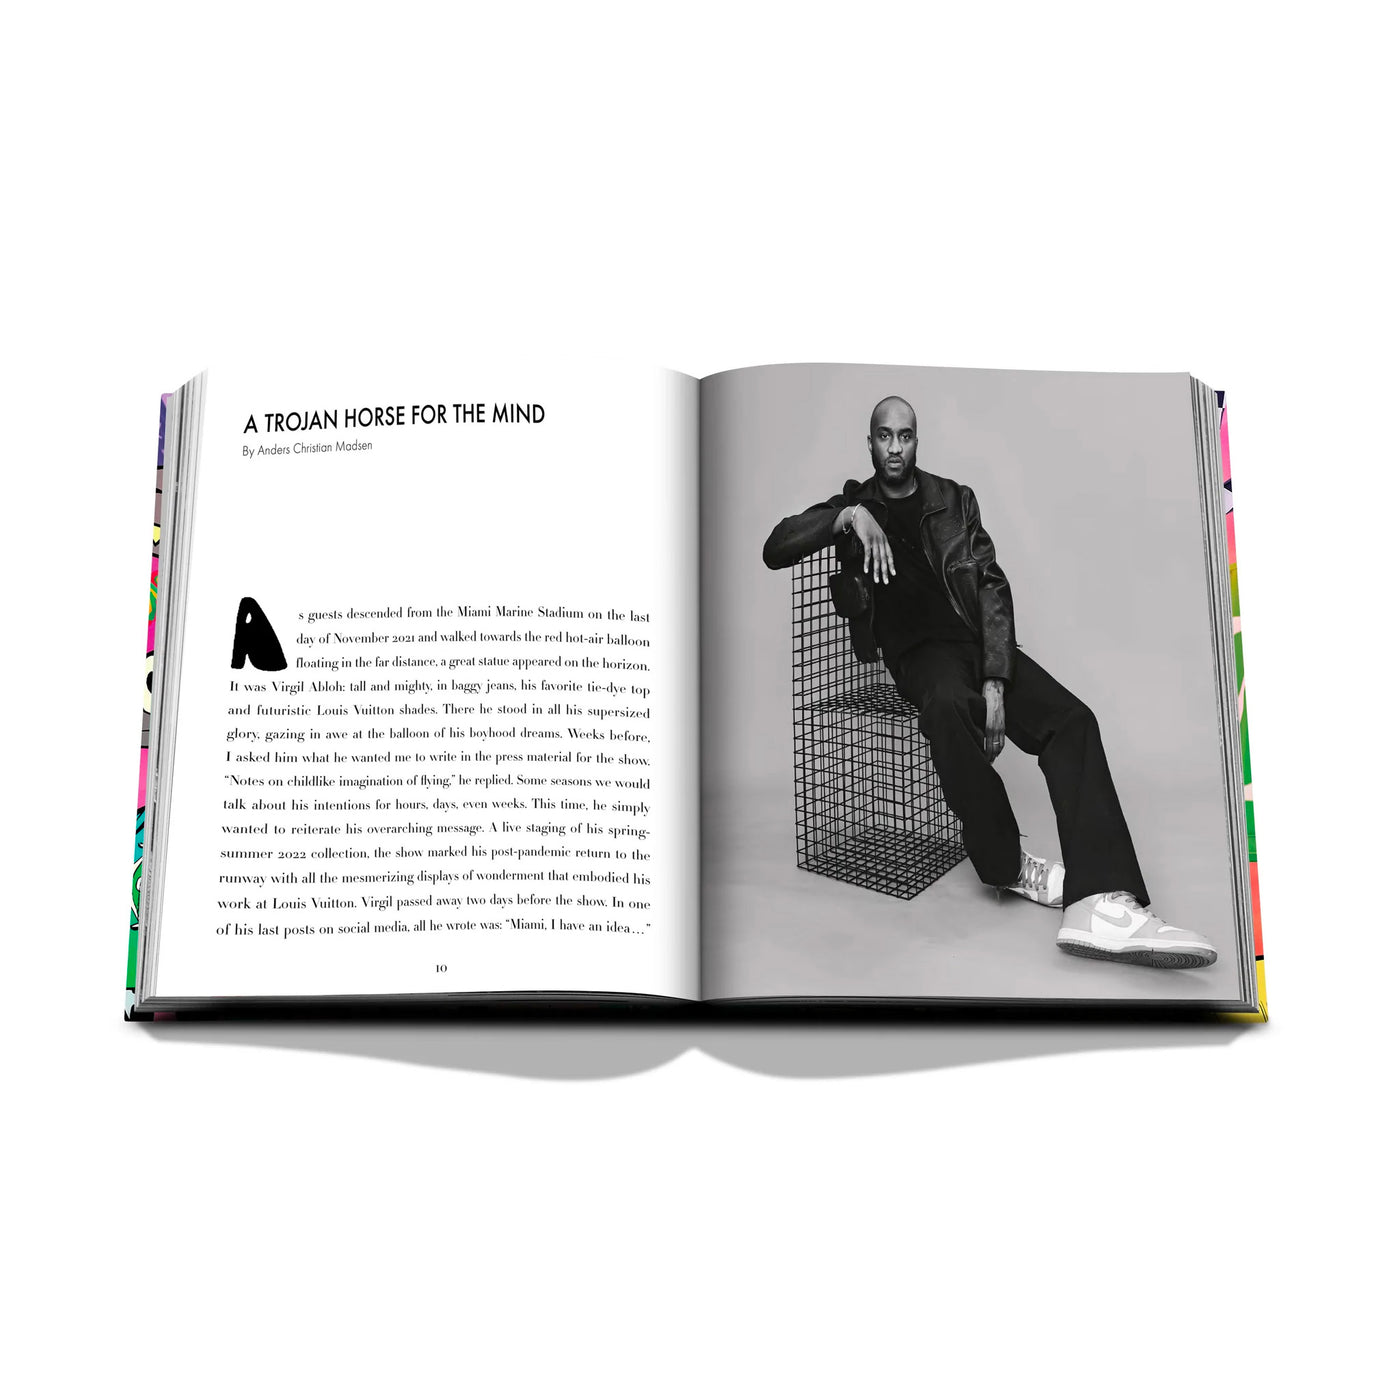 Louis Vuitton: Virgil Abloh Book